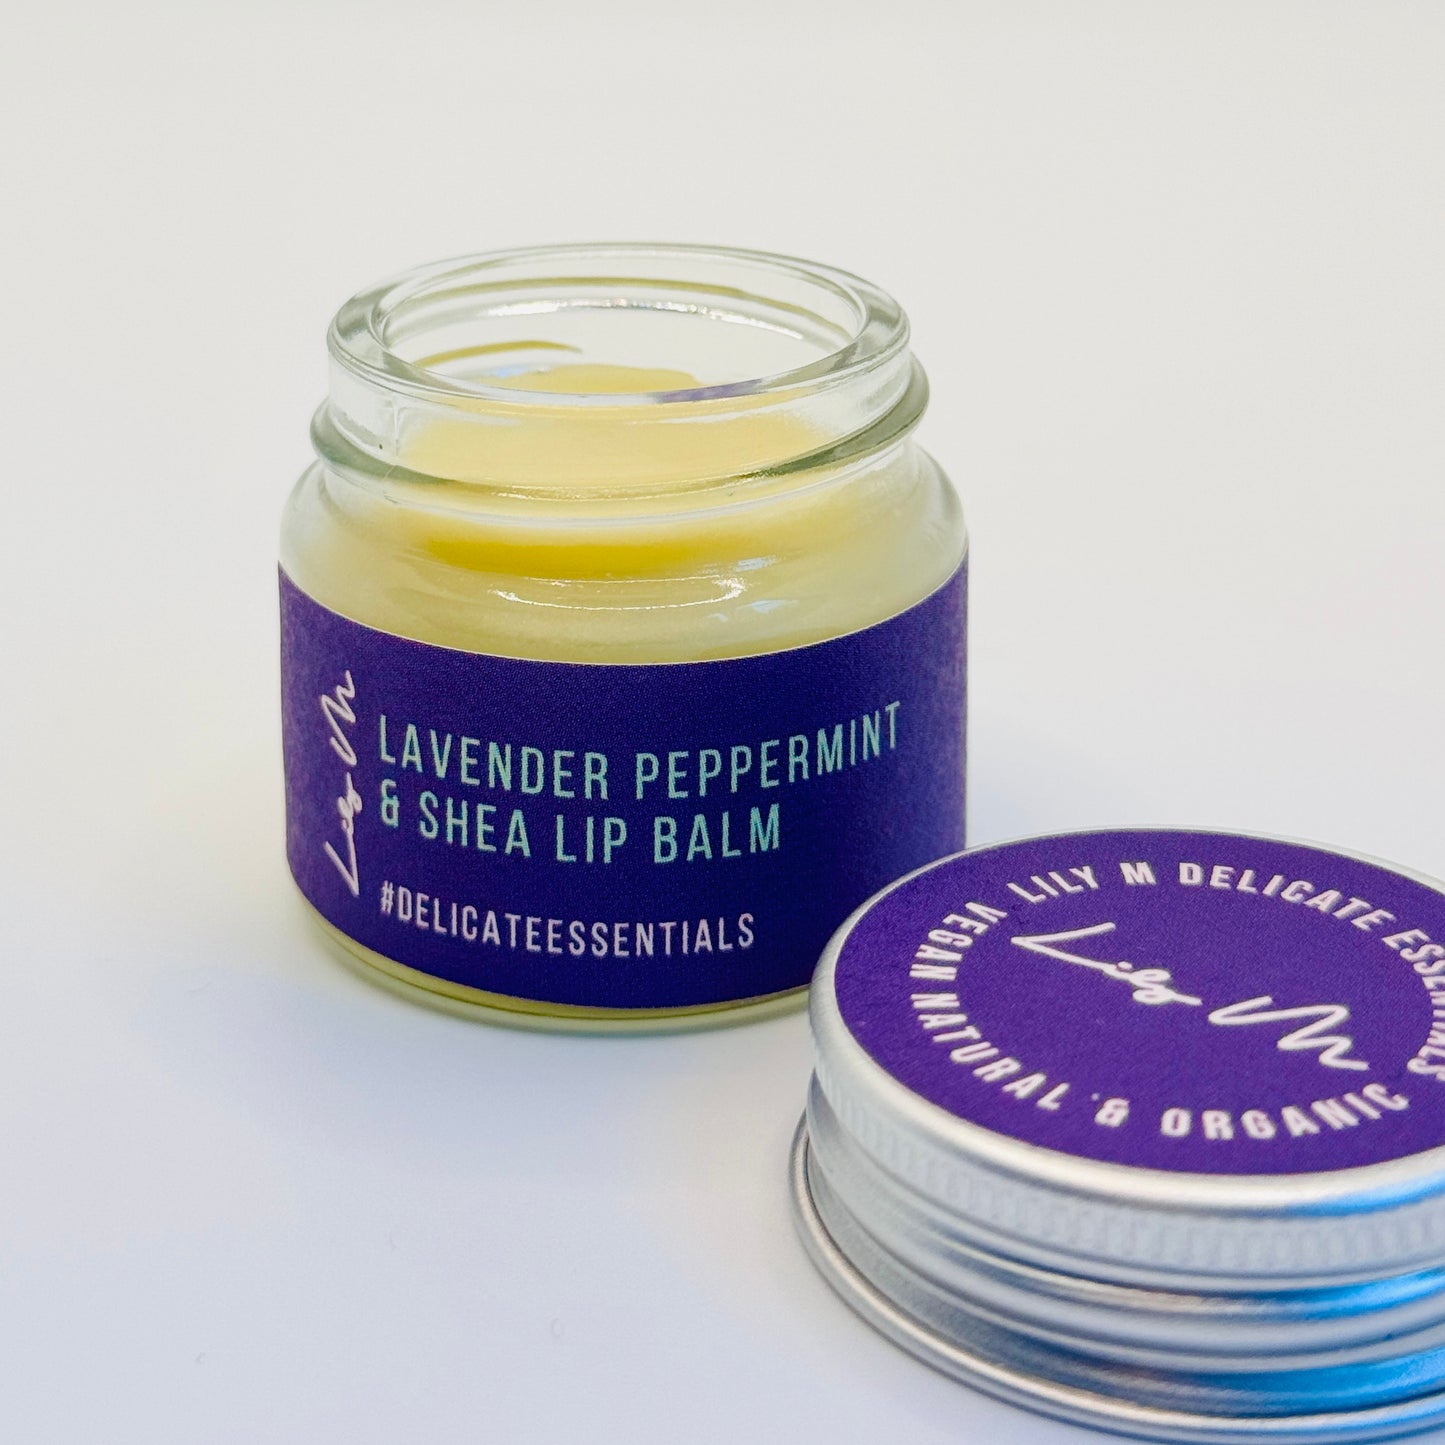 Lavender Peppermint & Shea Lip Balm